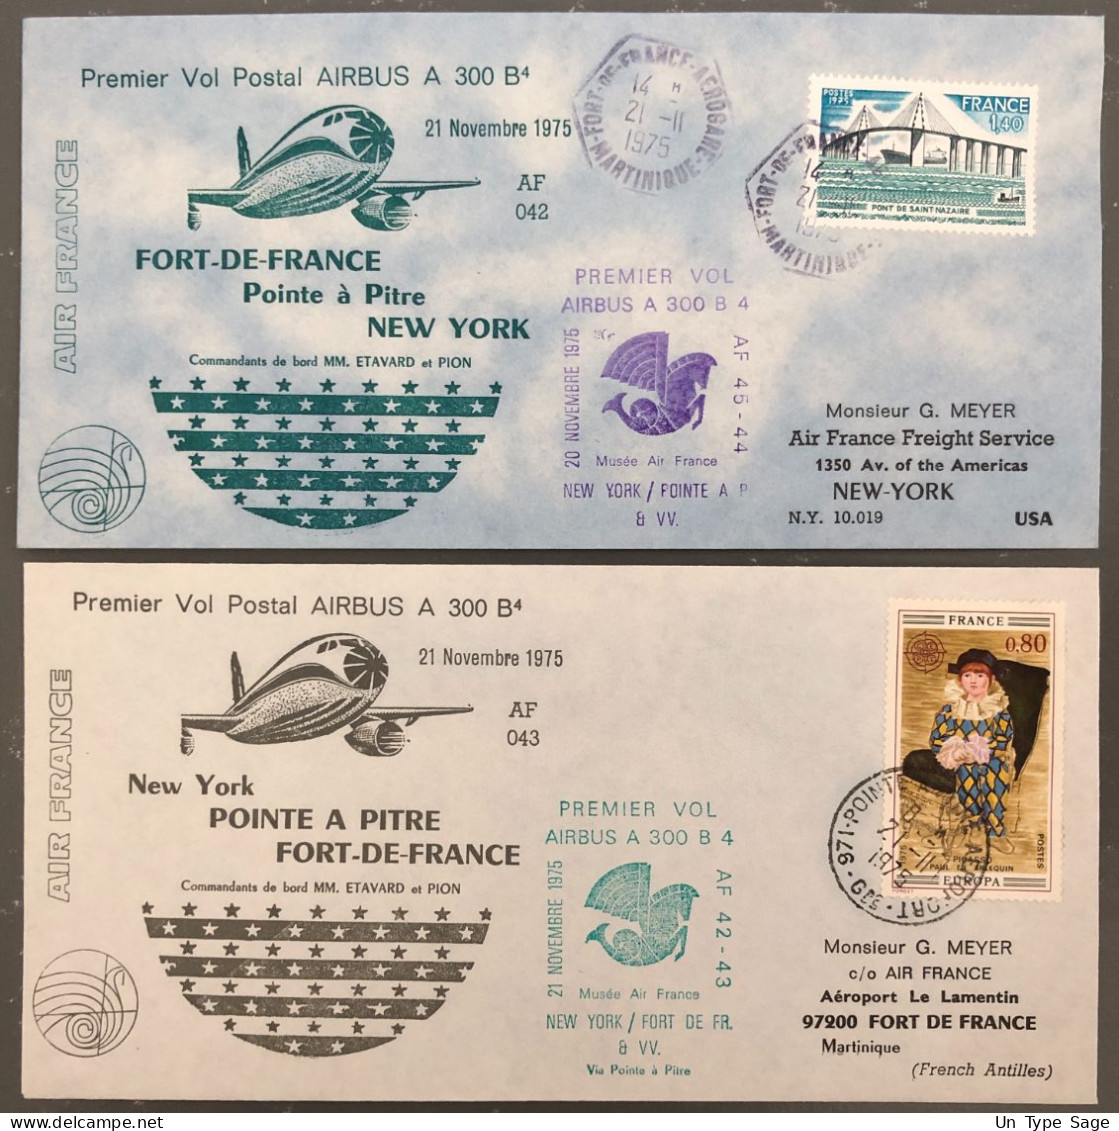 France, Premier Vol (Air France) New York, Point à Pitre, Fort De France 21.11.1975 - 2 Enveloppes - (B1507) - First Flight Covers